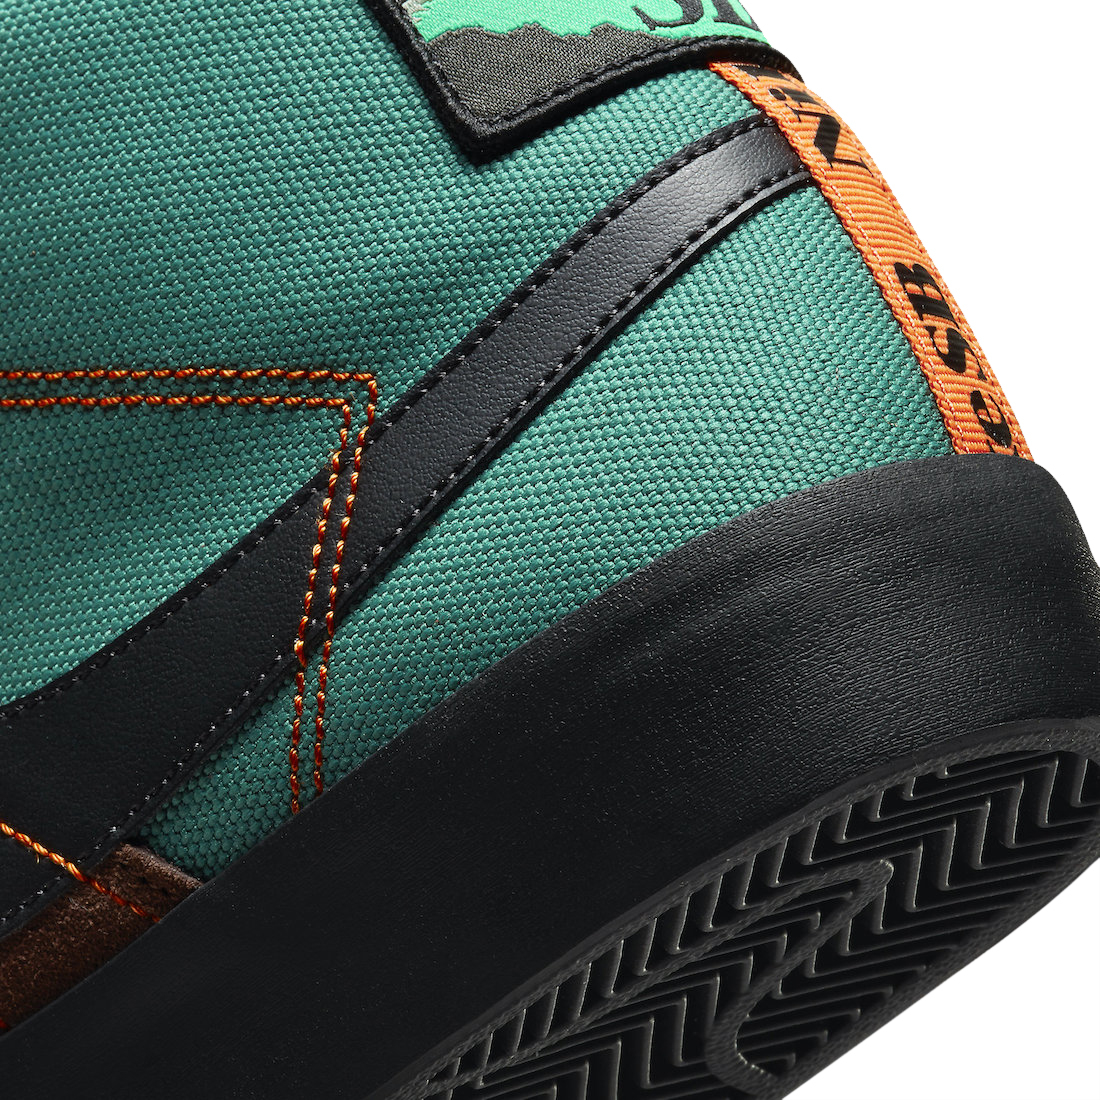 Nike SB Blazer Mid Premium Acclimate Pack Noble Green DC8903-300